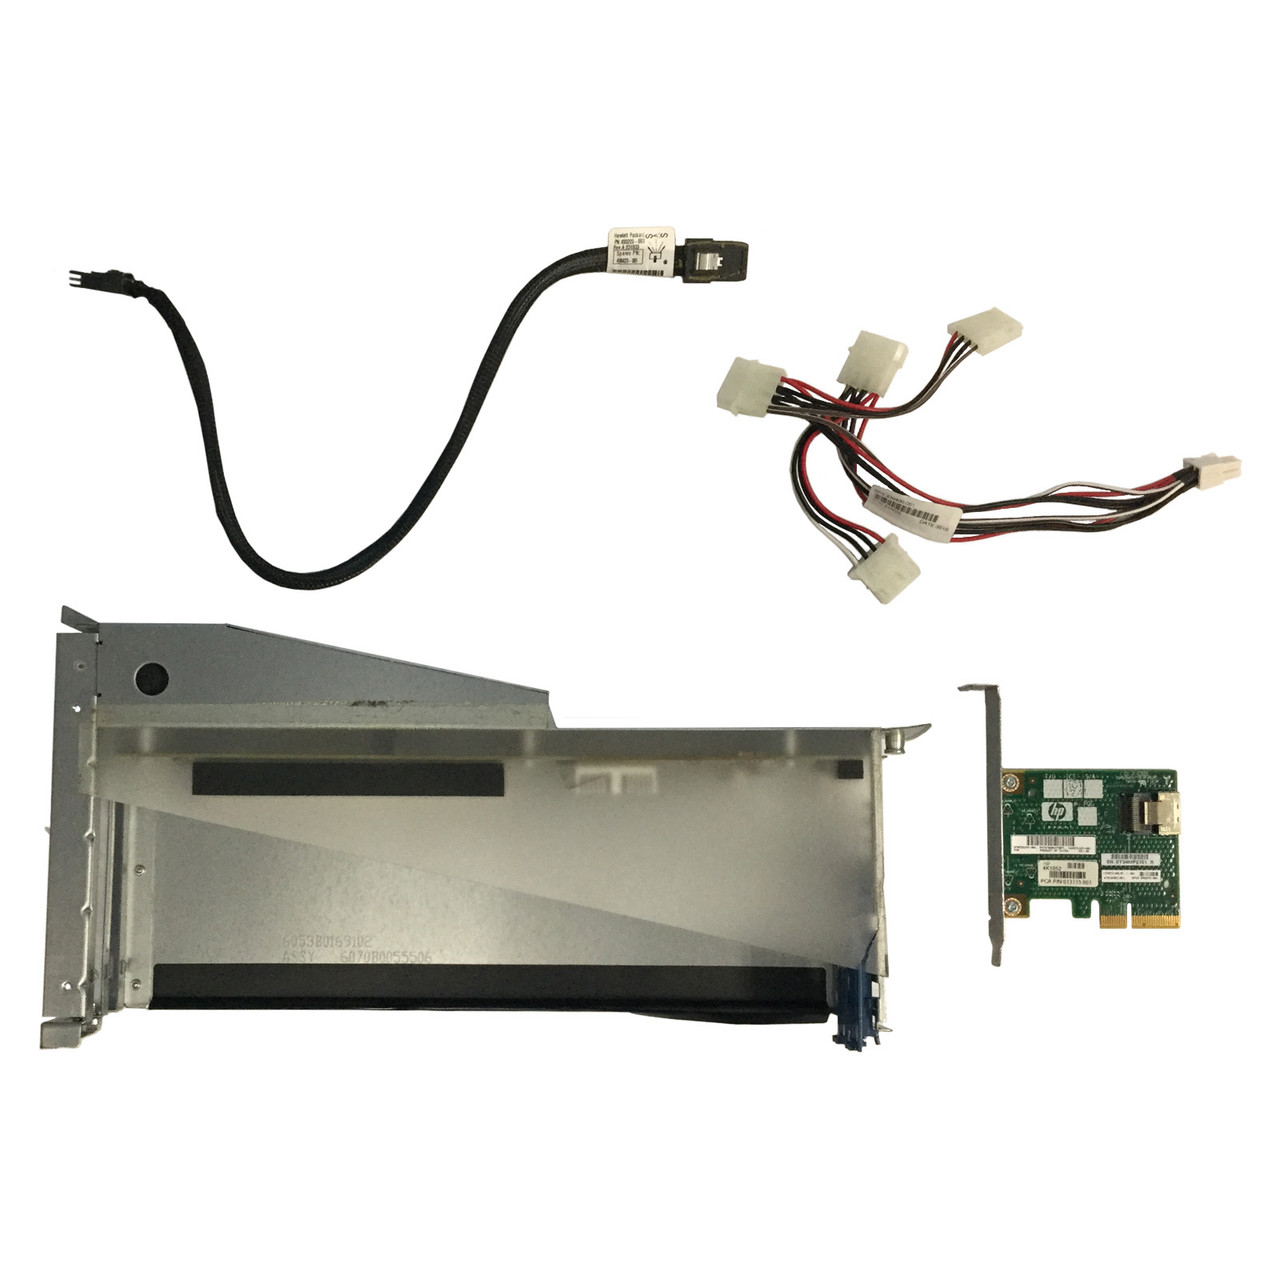 HP 488413-B21 ML330 G6 2 Slot PCI-X Riser Kit with bracket